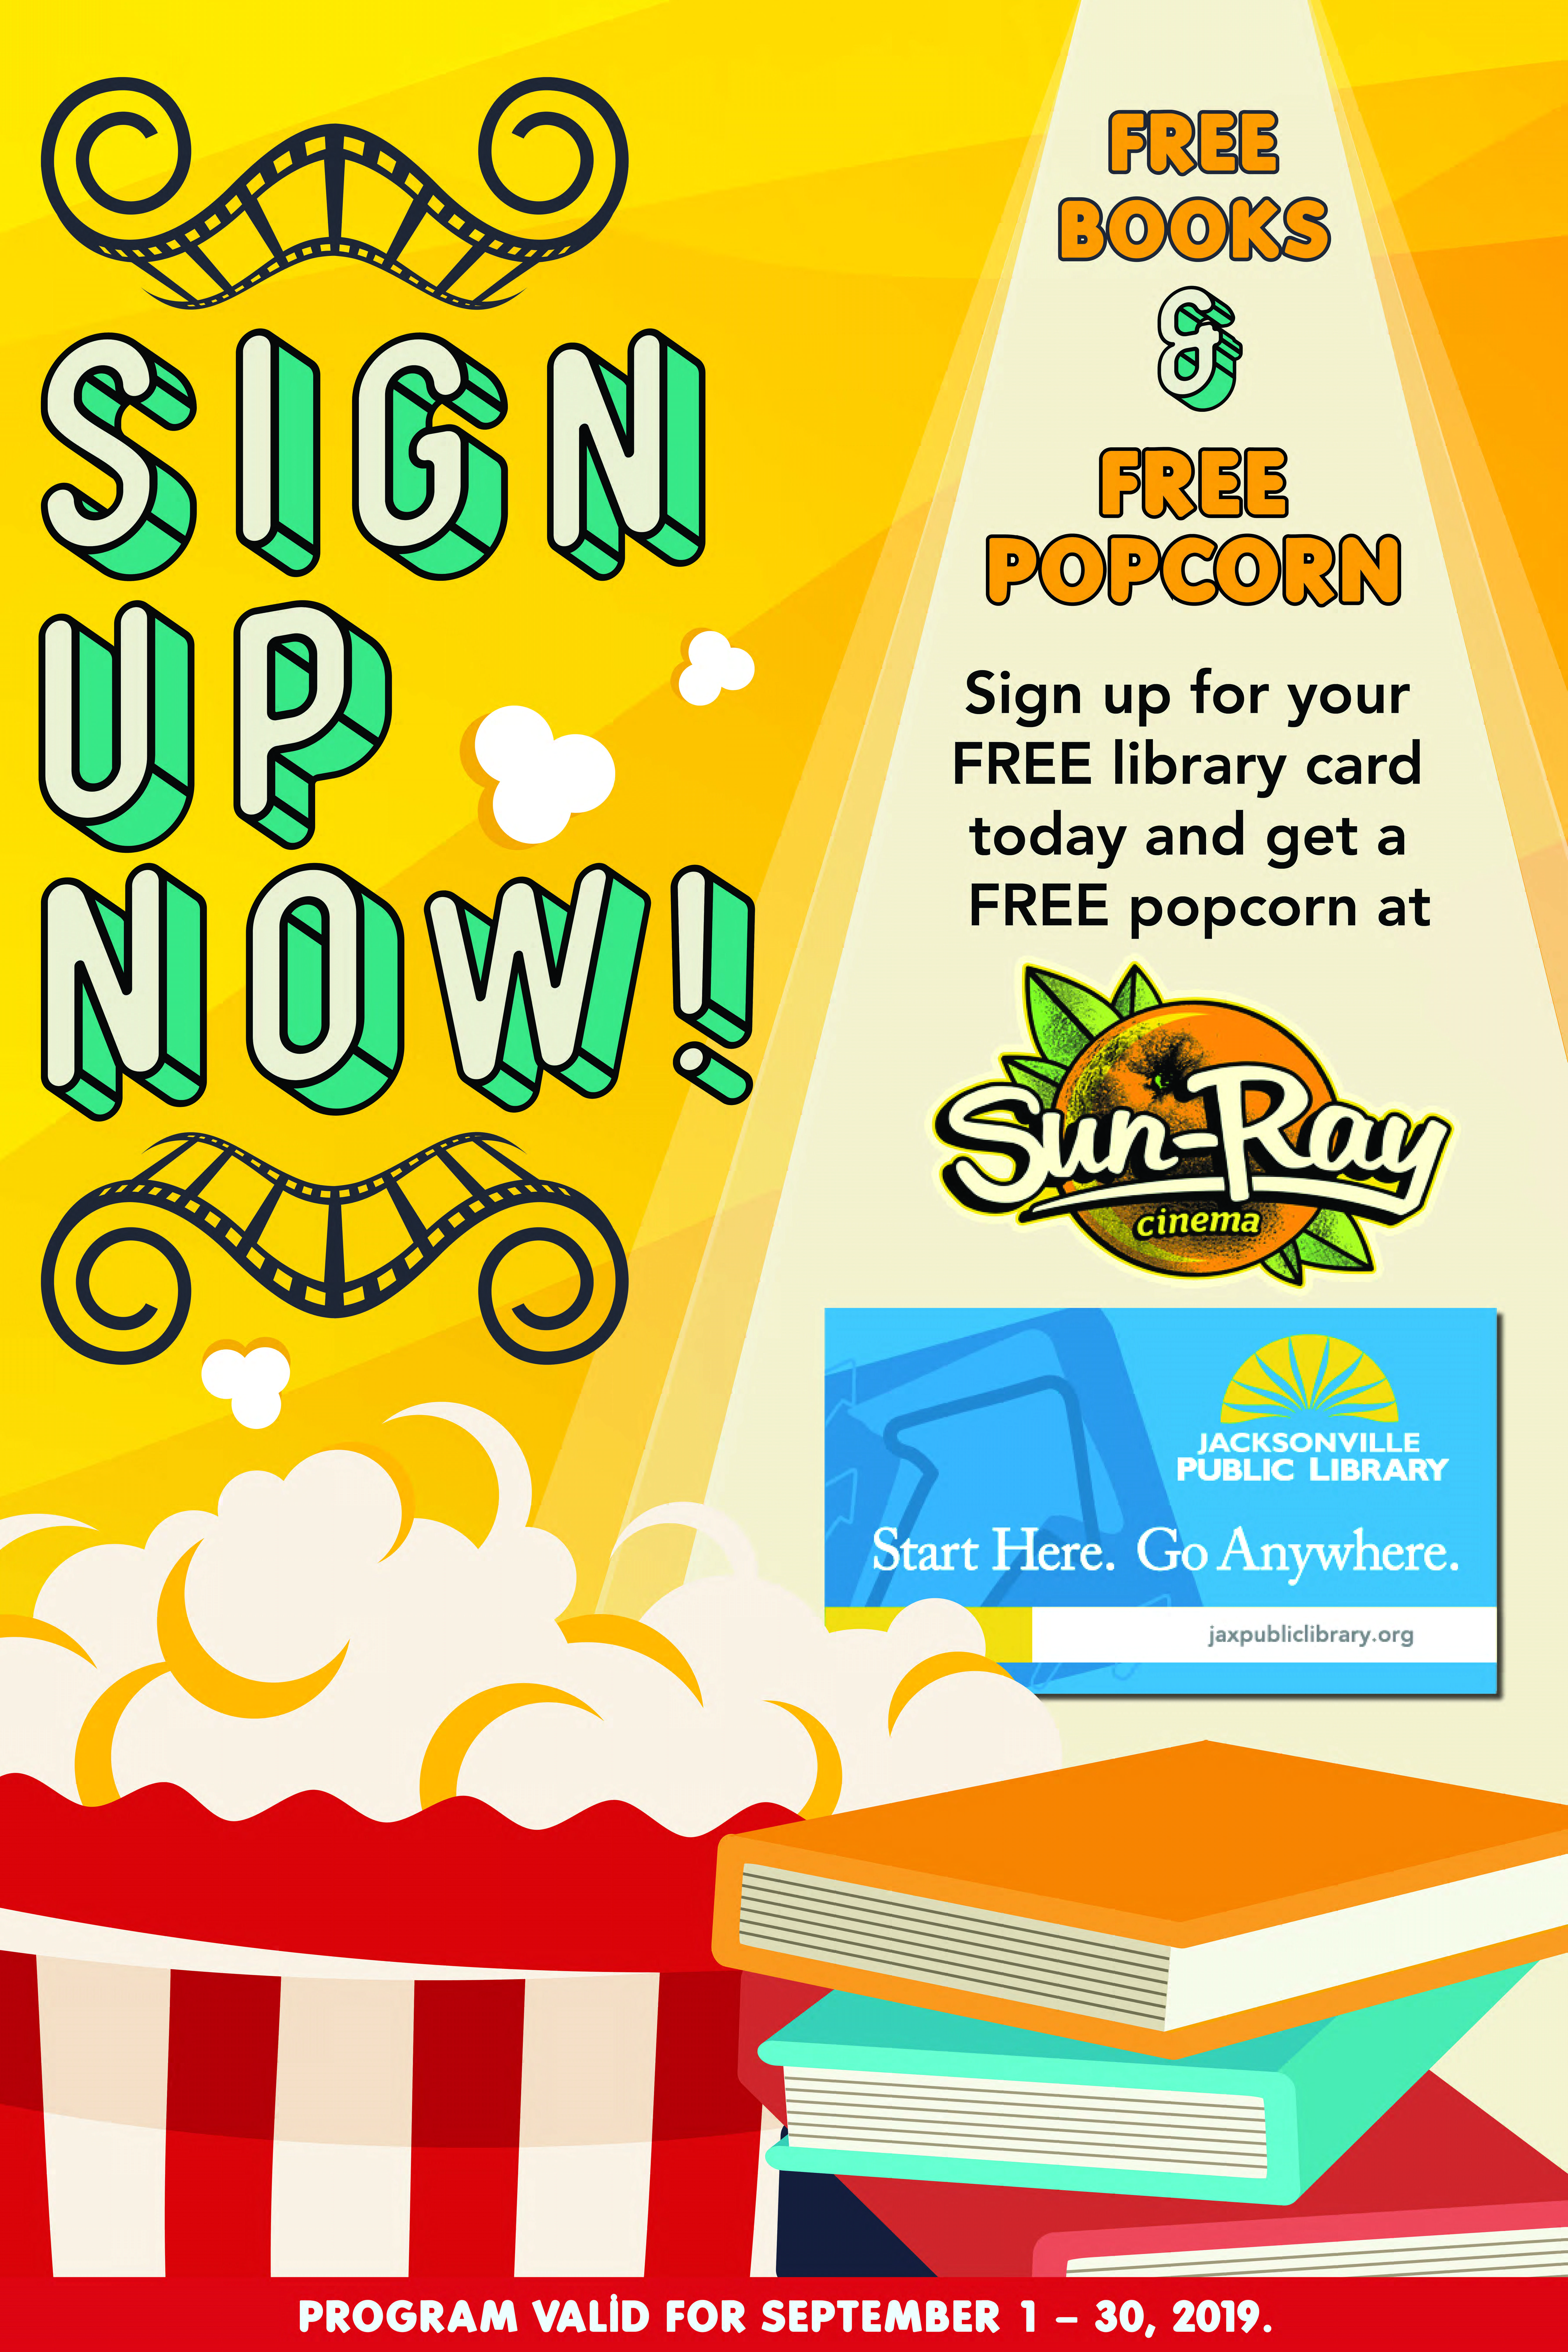 Sign Up Now, Free Books & Free Popcorn, Sunray Cinema, Jacksonville Public Library Card, Program Valid For September 1-30 2019